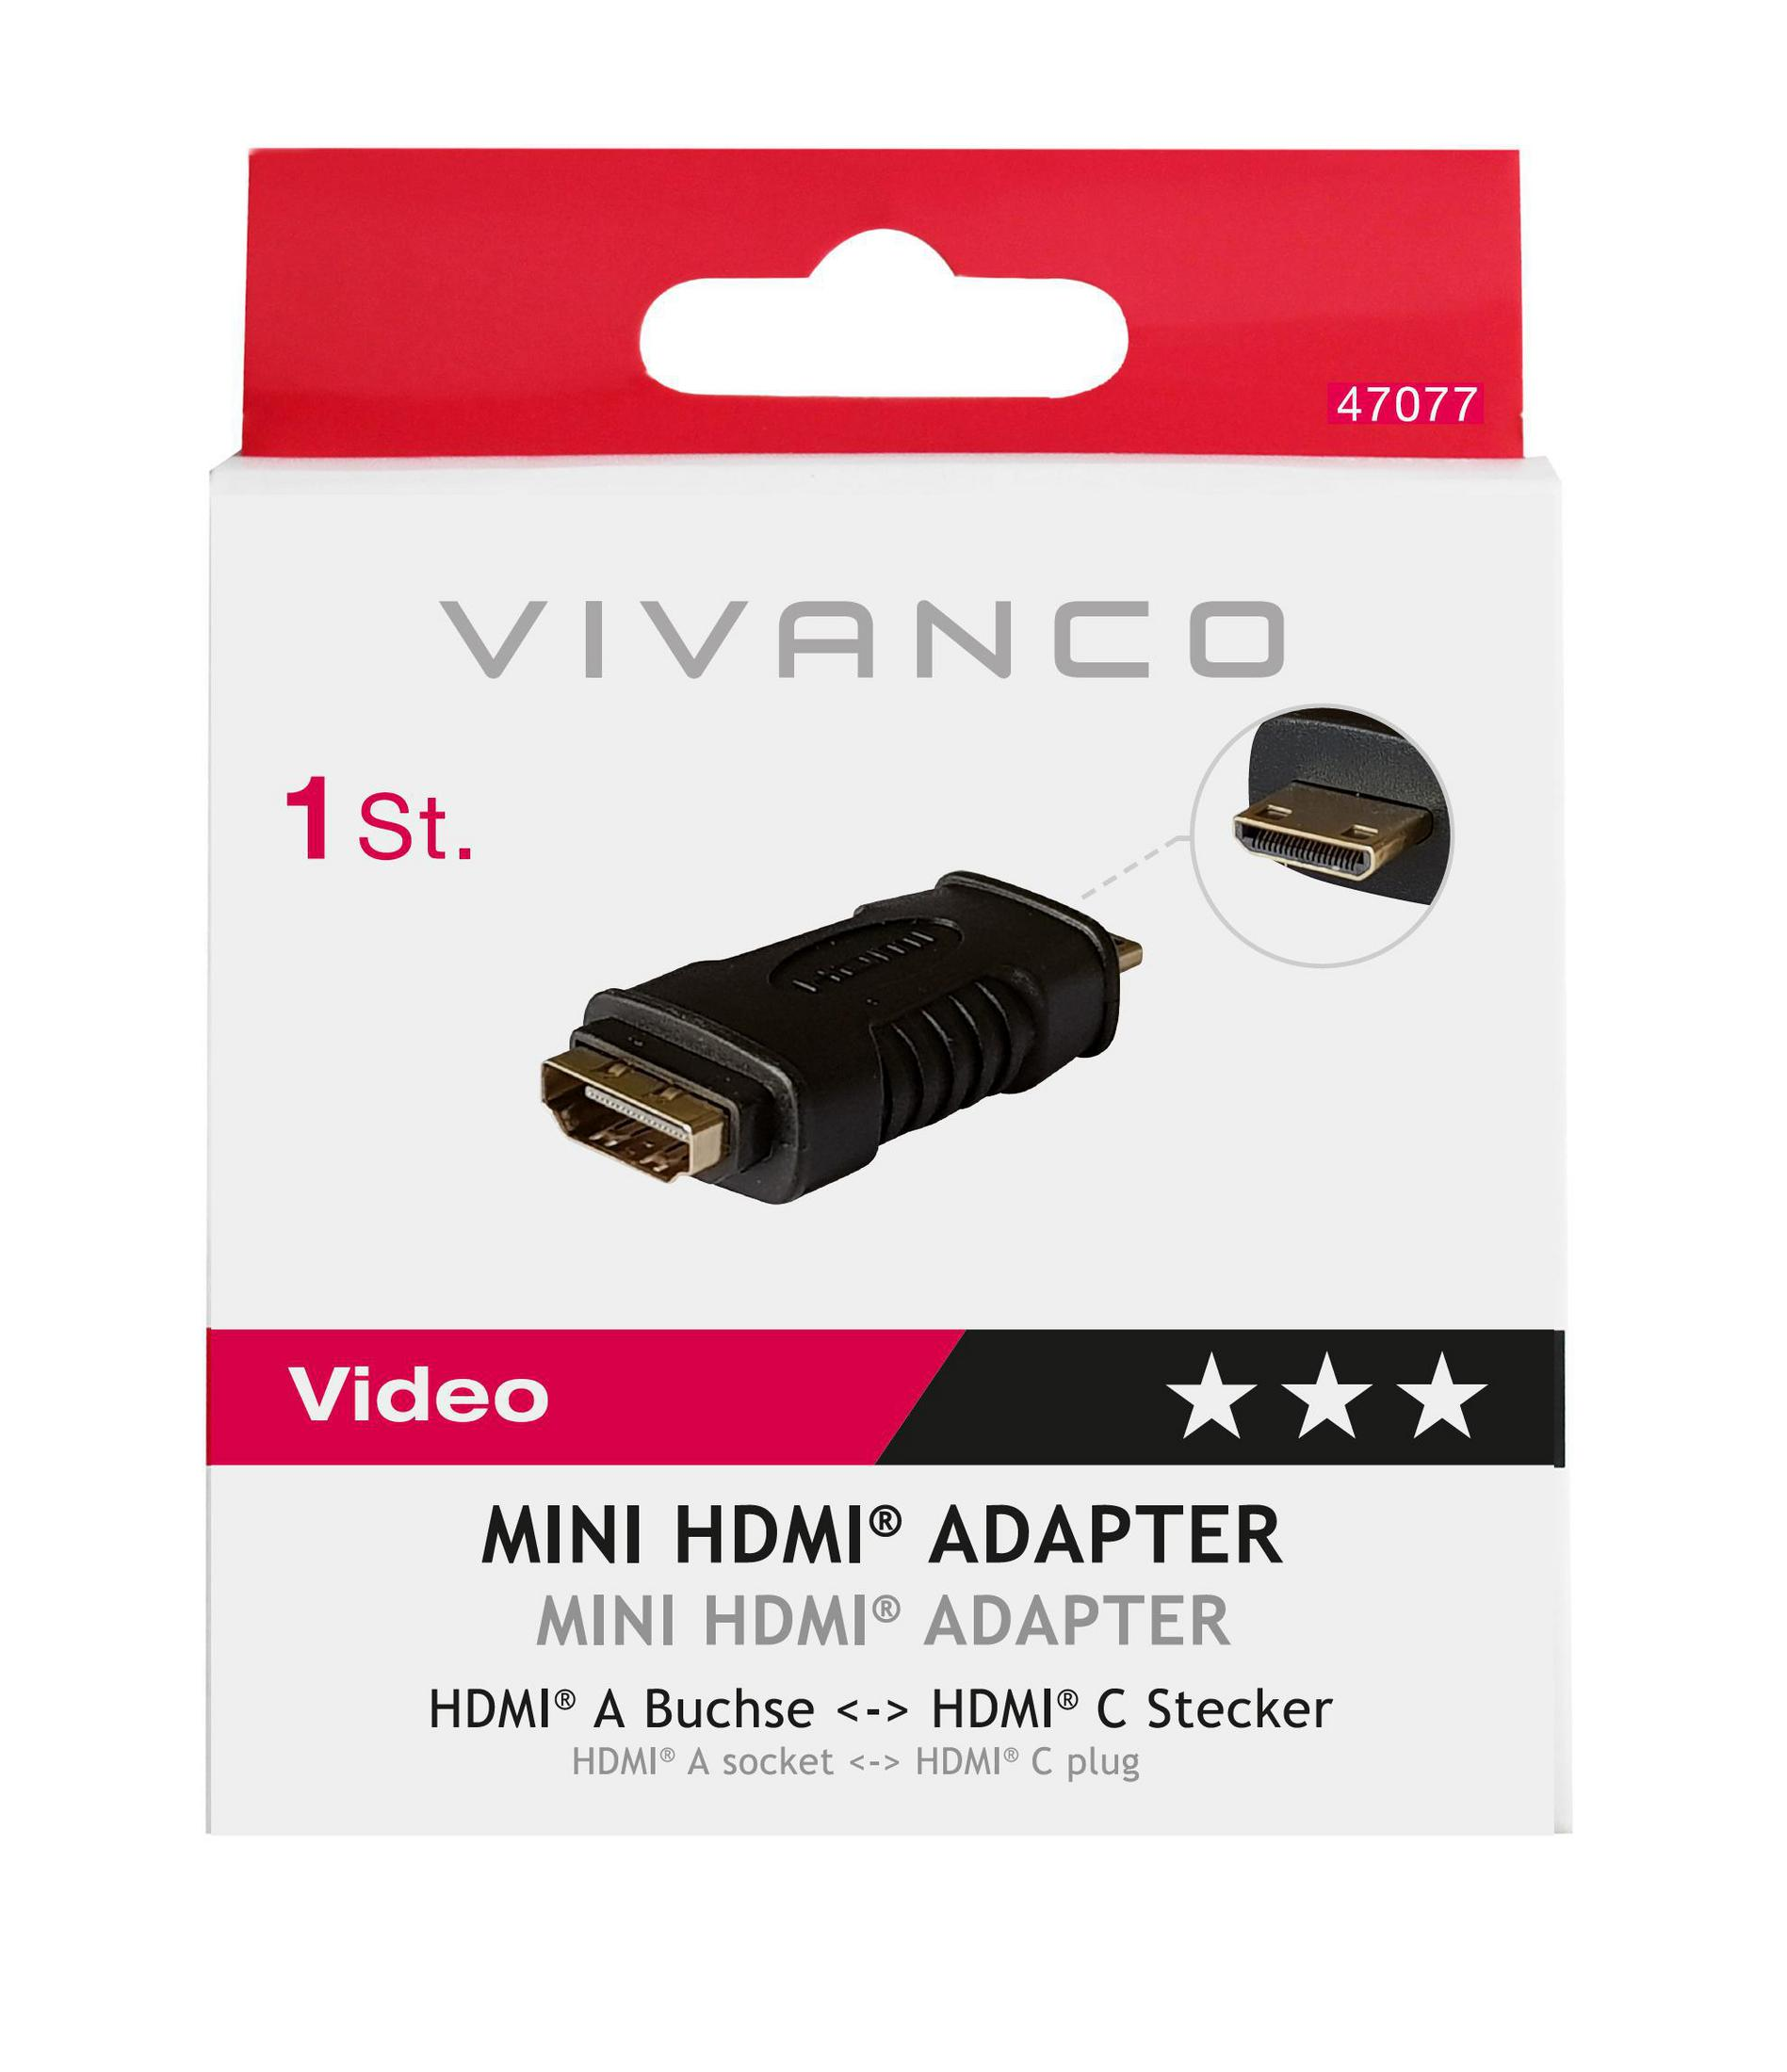 C Adapter 47077 HDMI / VIVANCO A HDMI